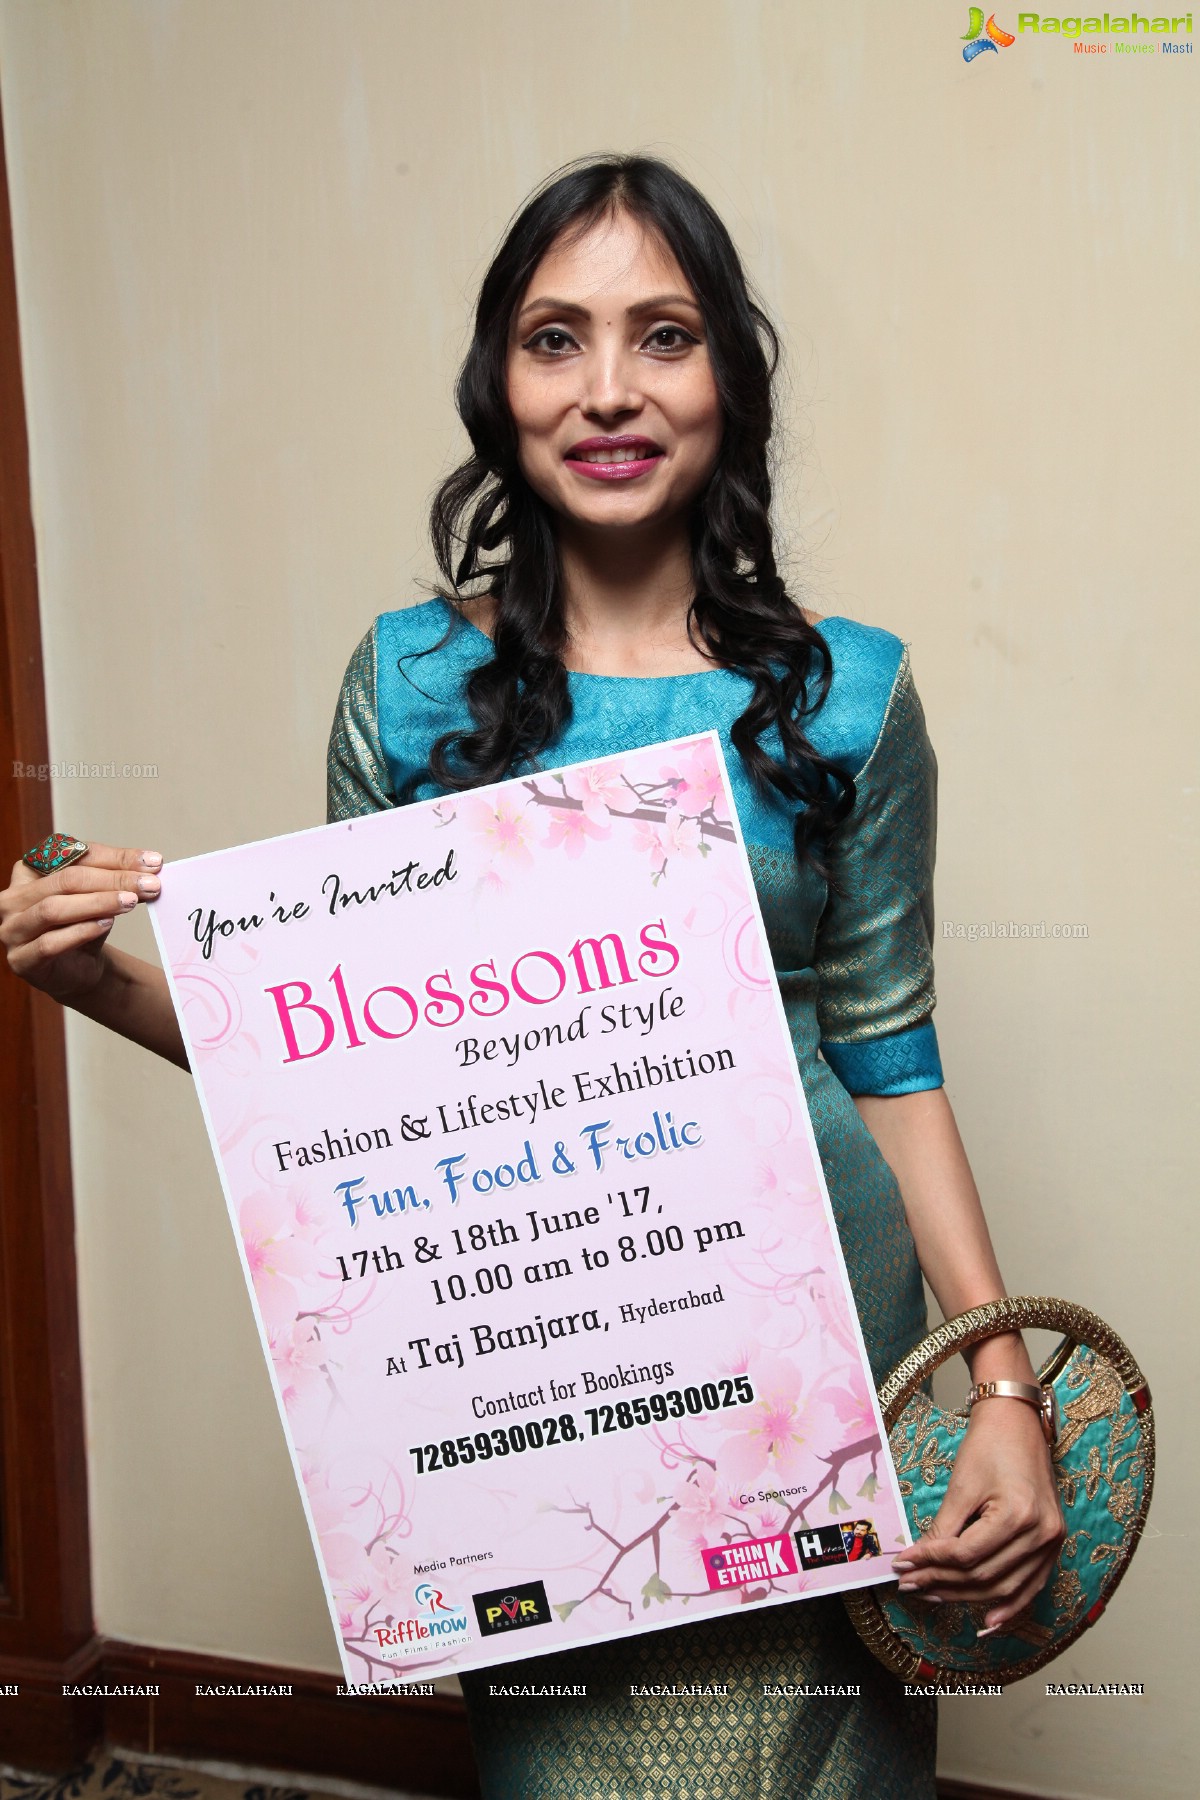 Blossoms - Beyond Style Fashion and Lifestyle Exhibition Launch Party at Taj Banjara, Banjara Hills, Hyderabad